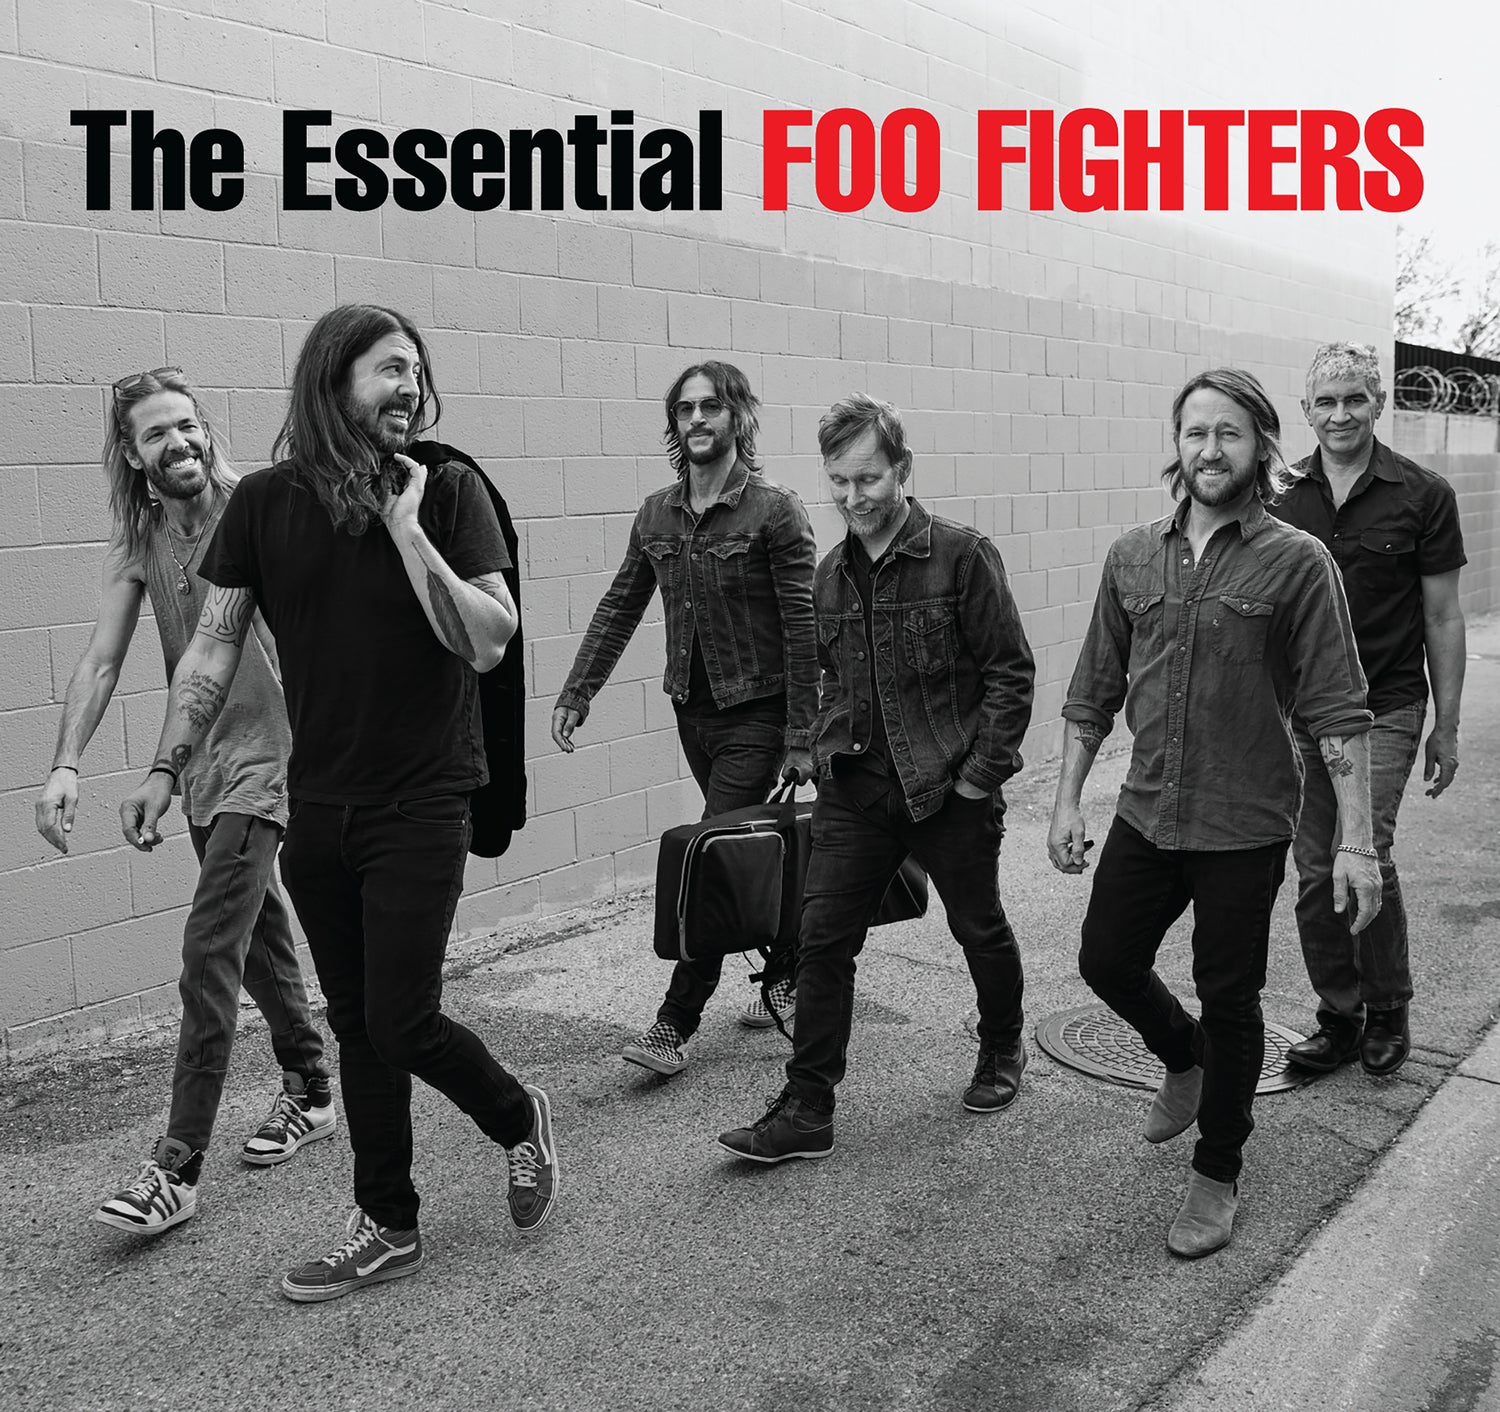 Foo Fighters The Essential Foo Fighters CD